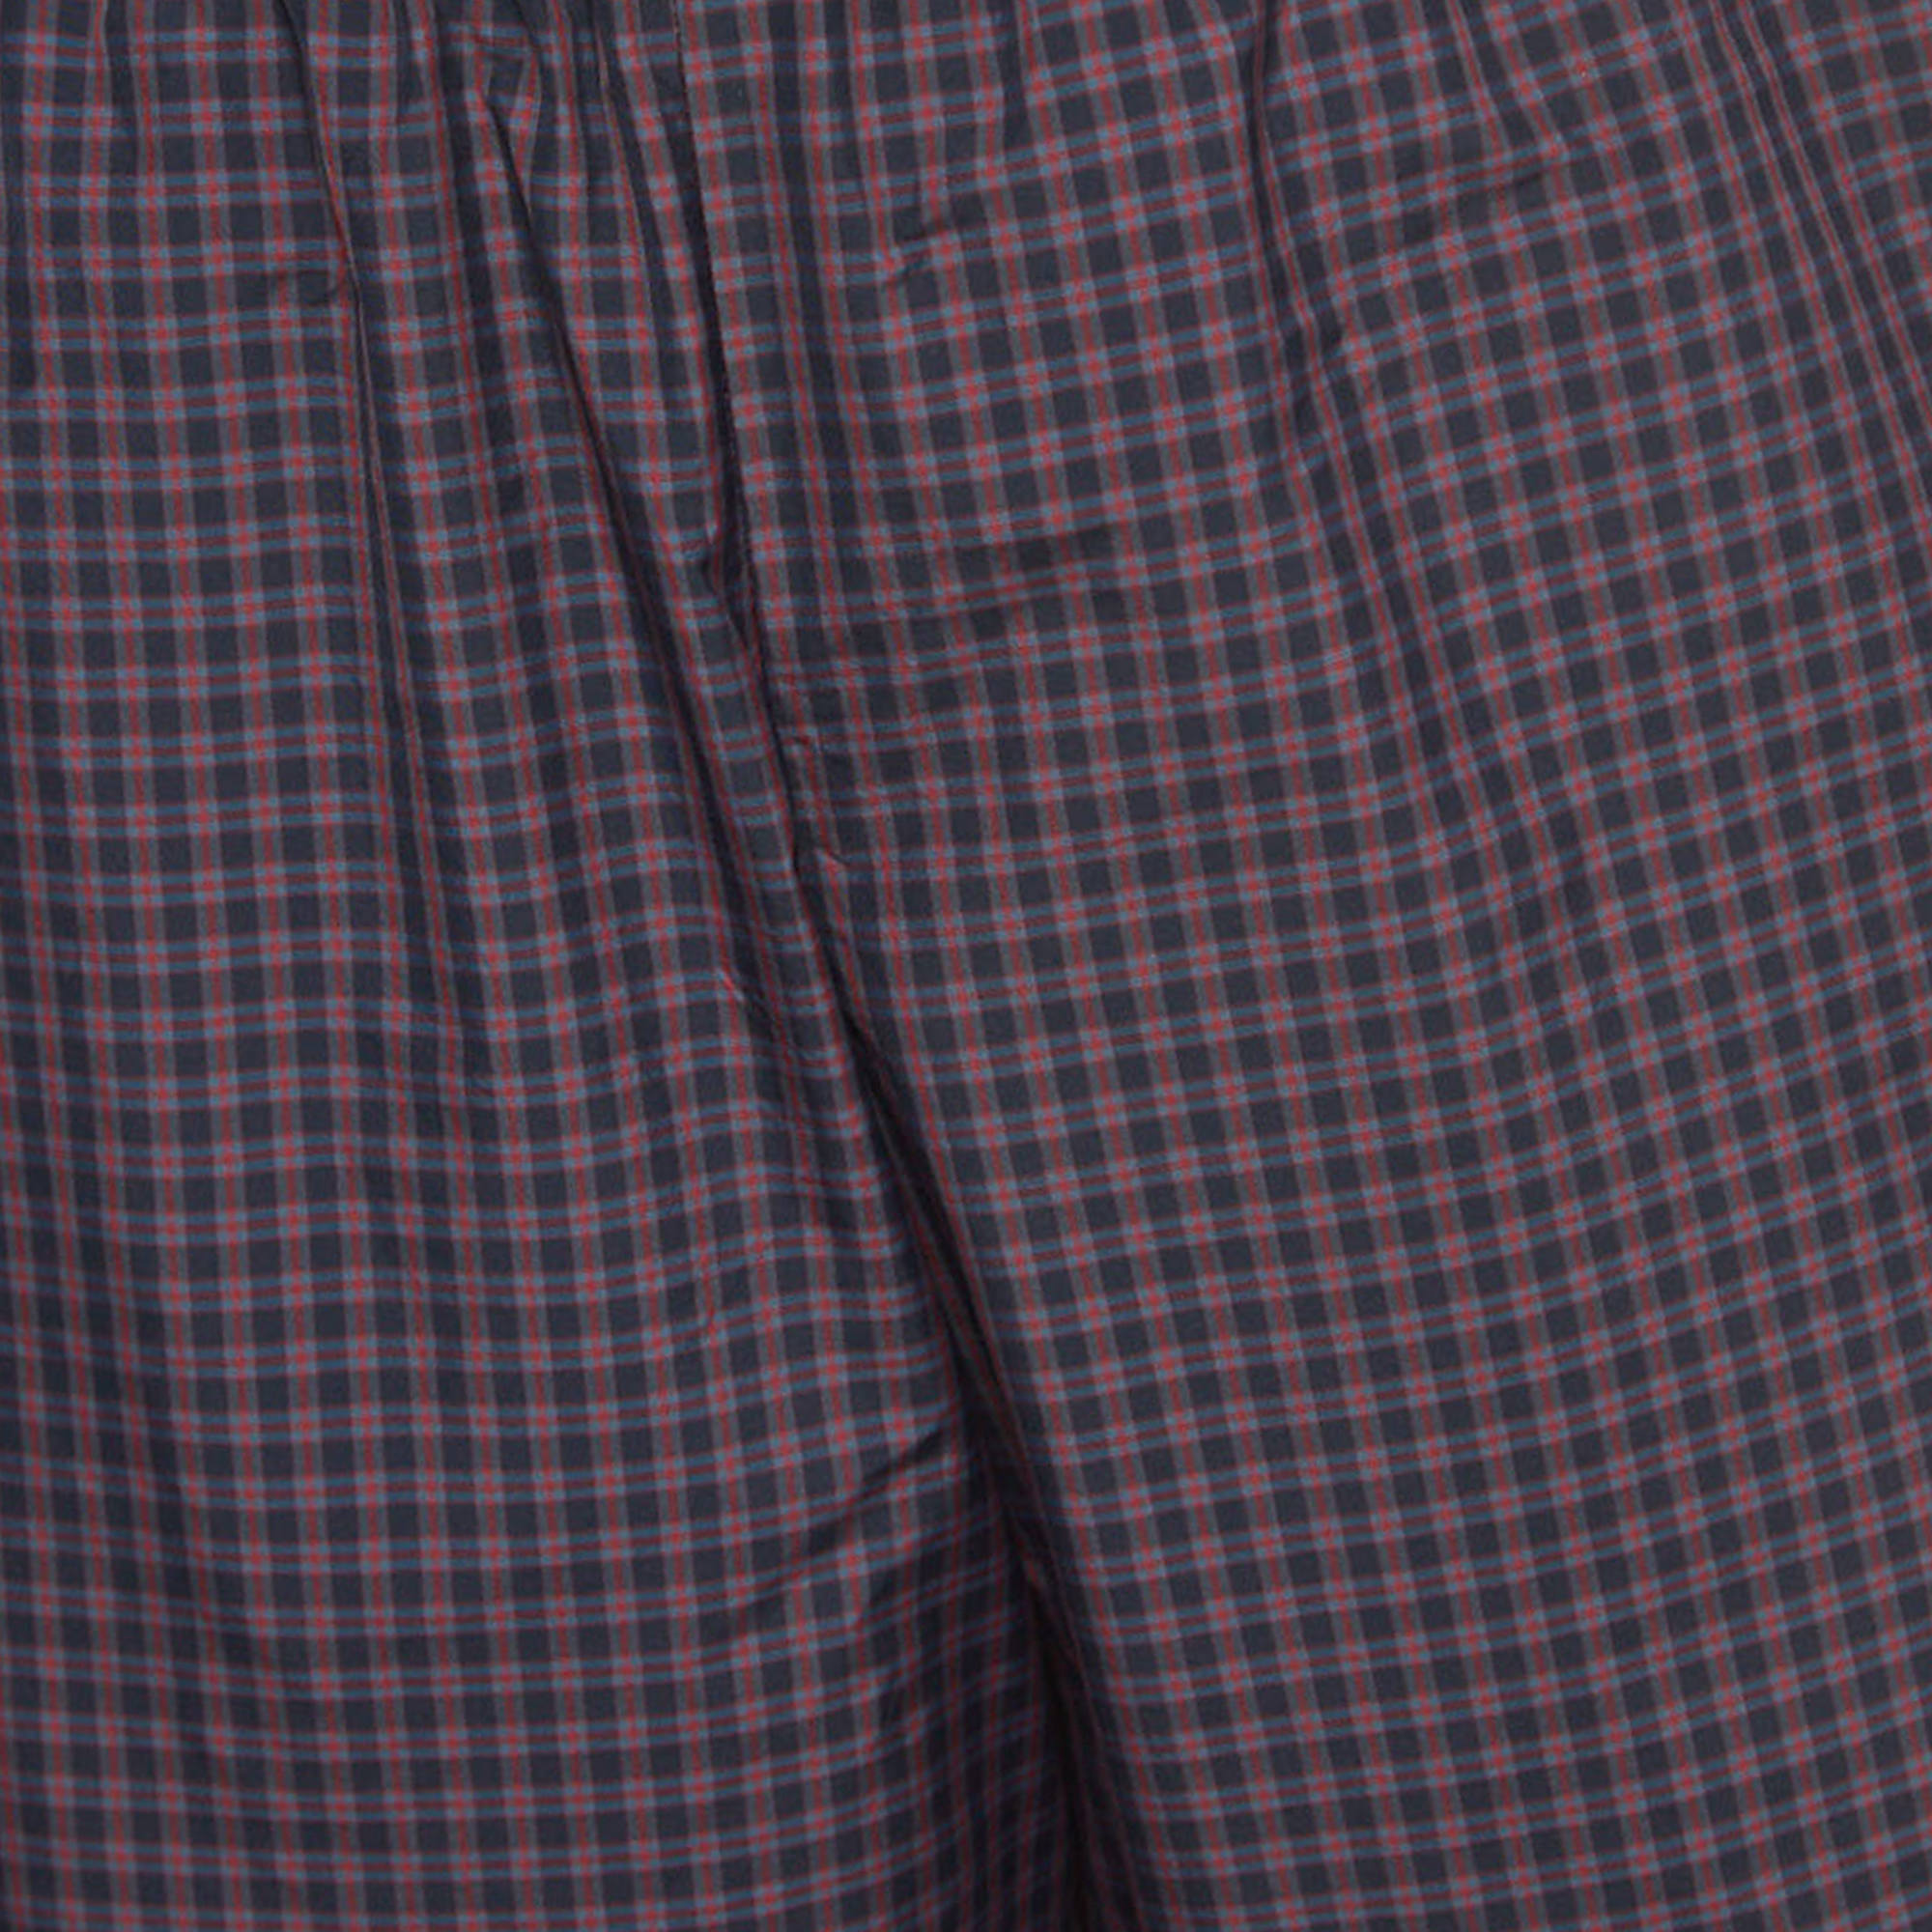 Balenciaga Navy Blue/Red Checked Nylon Drawstring Shorts M